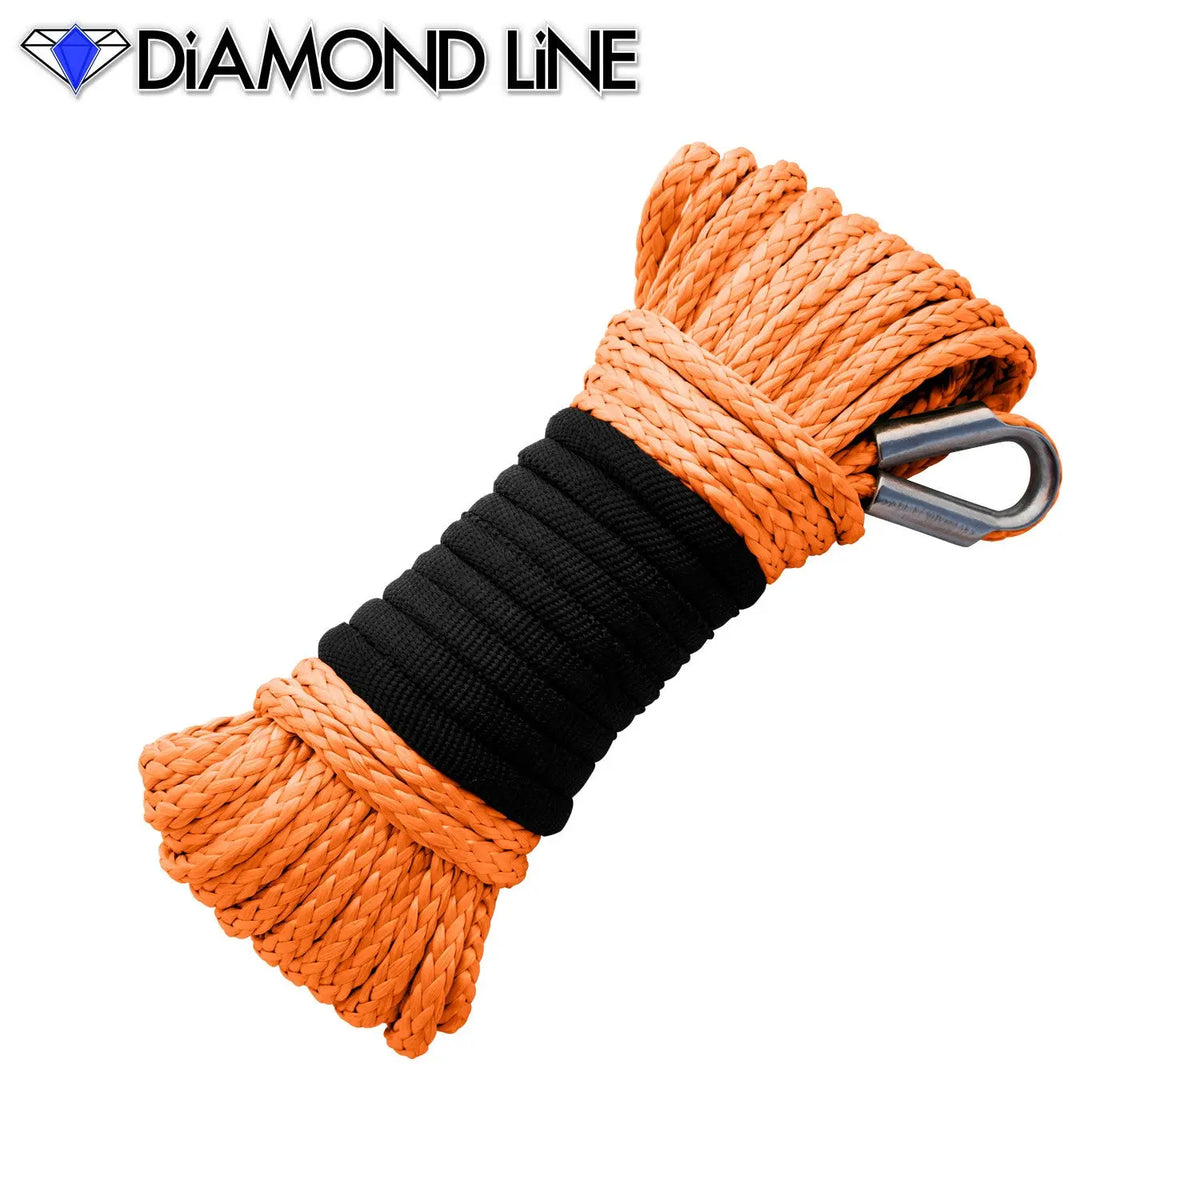 3/16" x 50' Diamond Line Winch Rope Mainline - Orange.